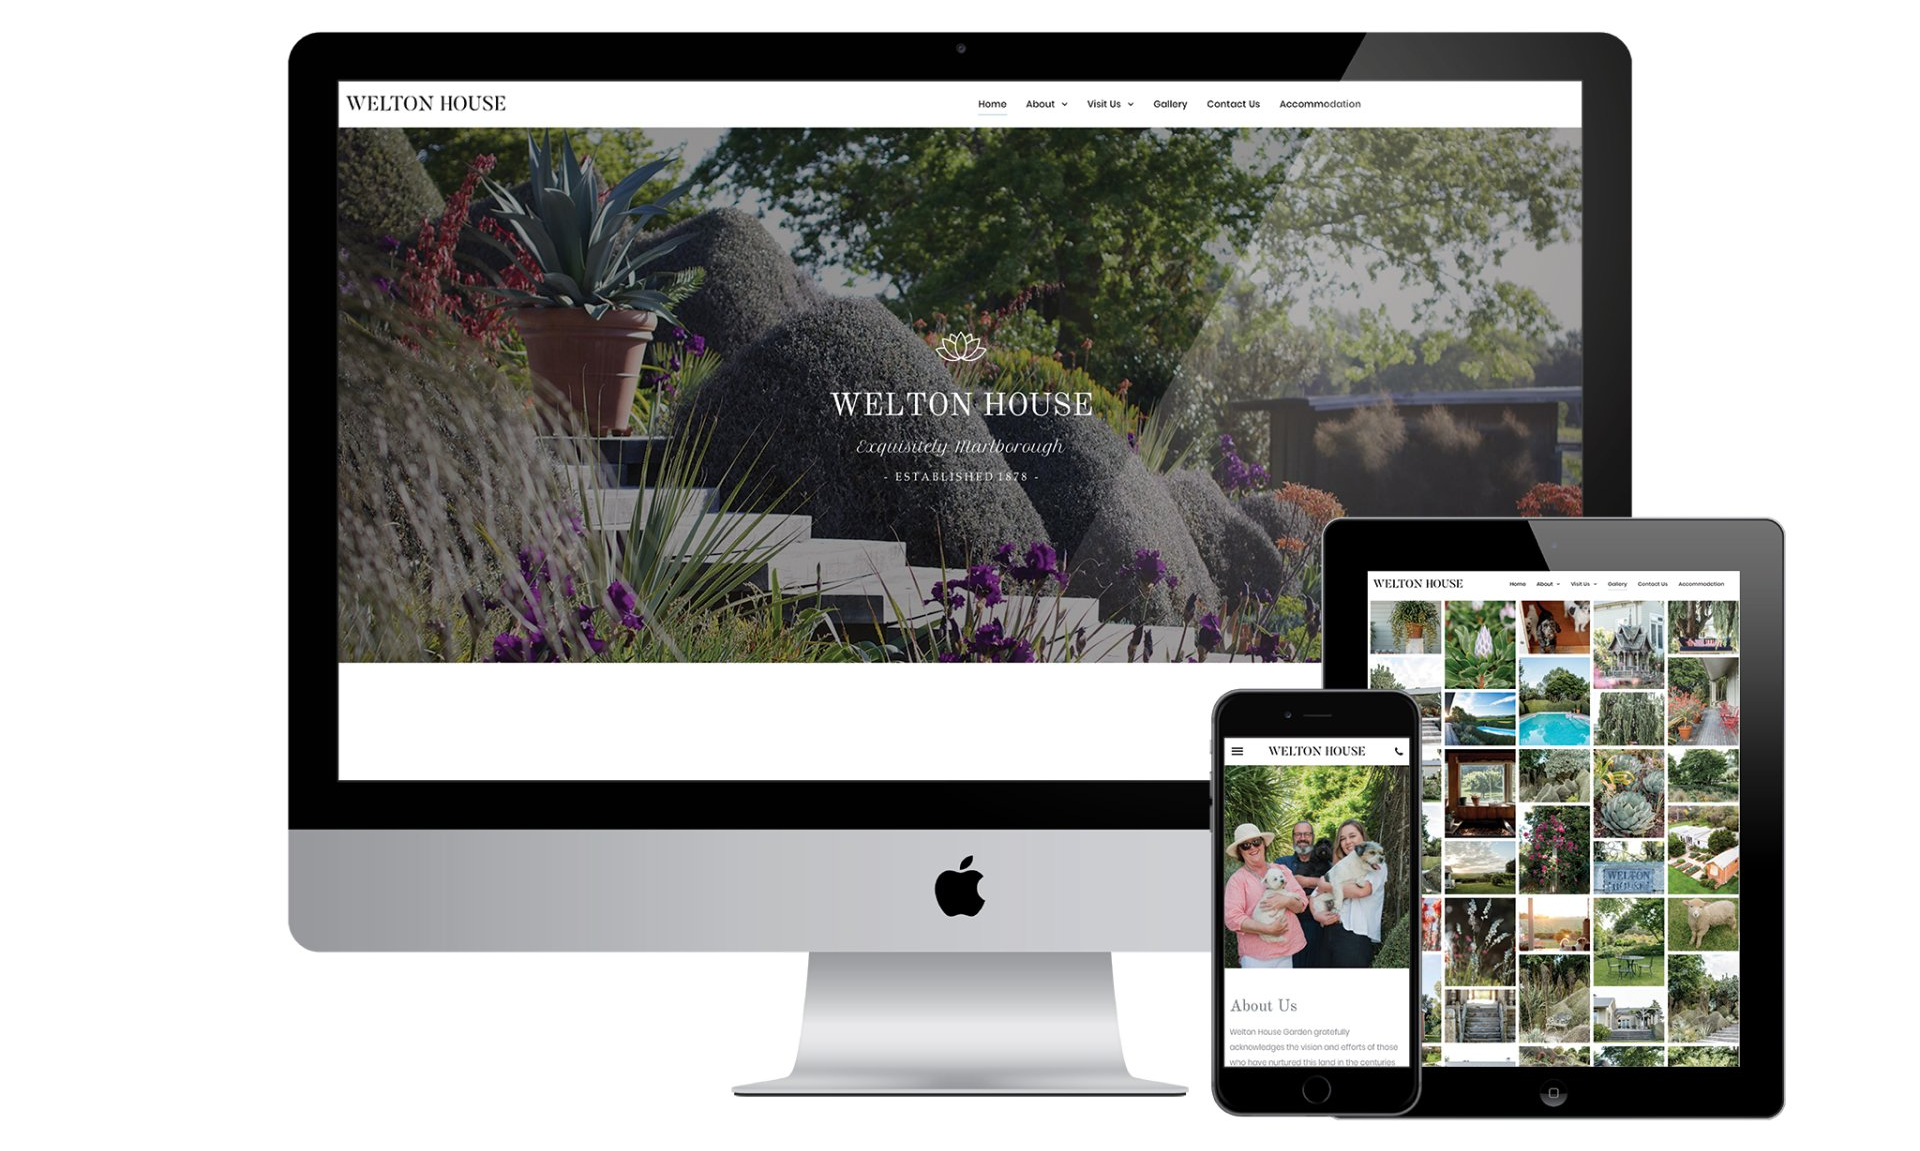 Welton House website designed by Vanilla Hayes creative graphic design  studio in Blenheim, Marlborough, New Zealand